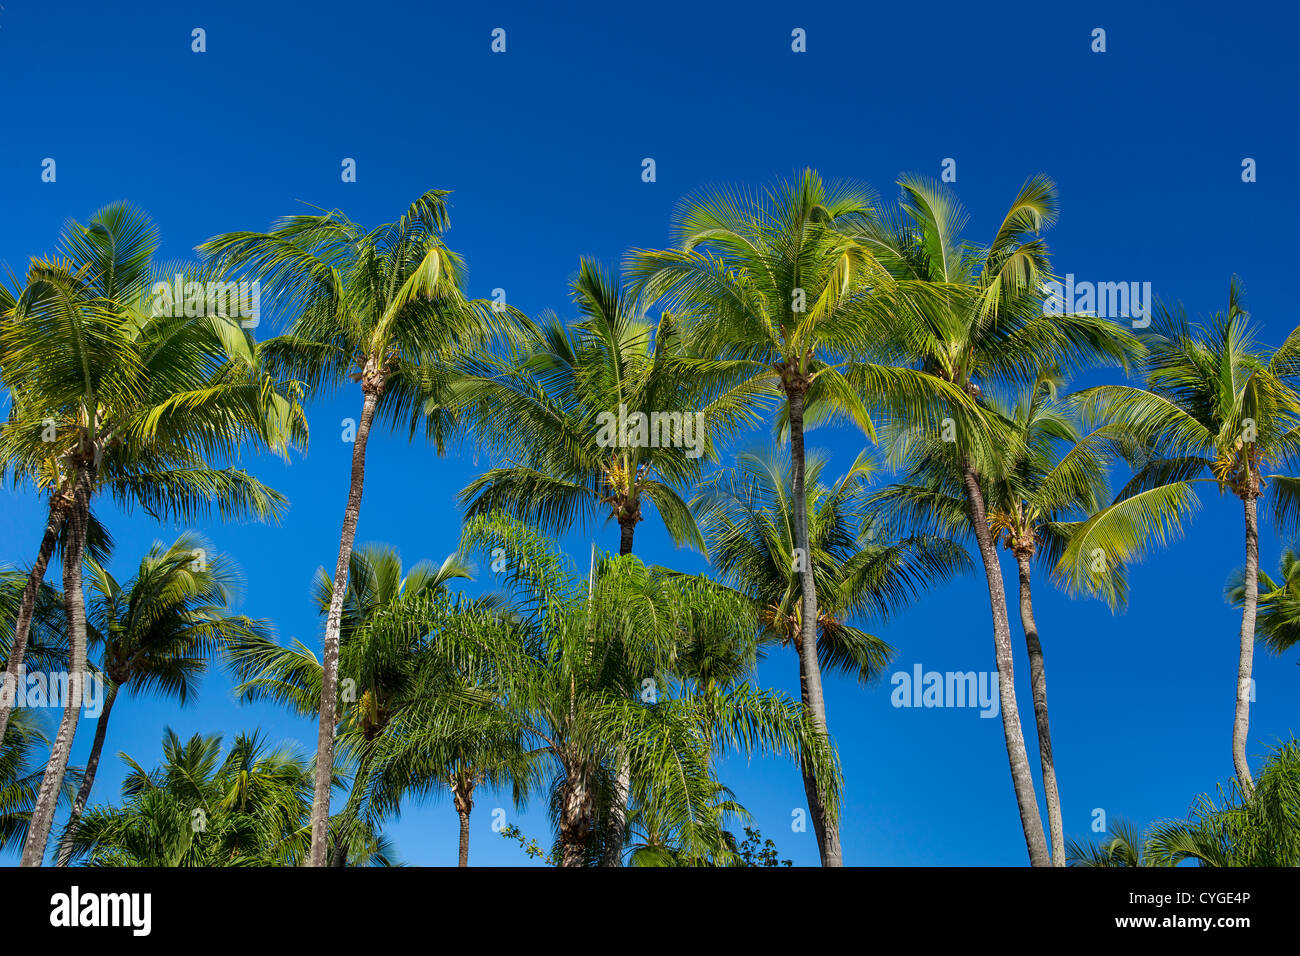 SAN JUAN, PUERTO RICO - Palm trees at Isla Verde beach resort area. Stock Photo